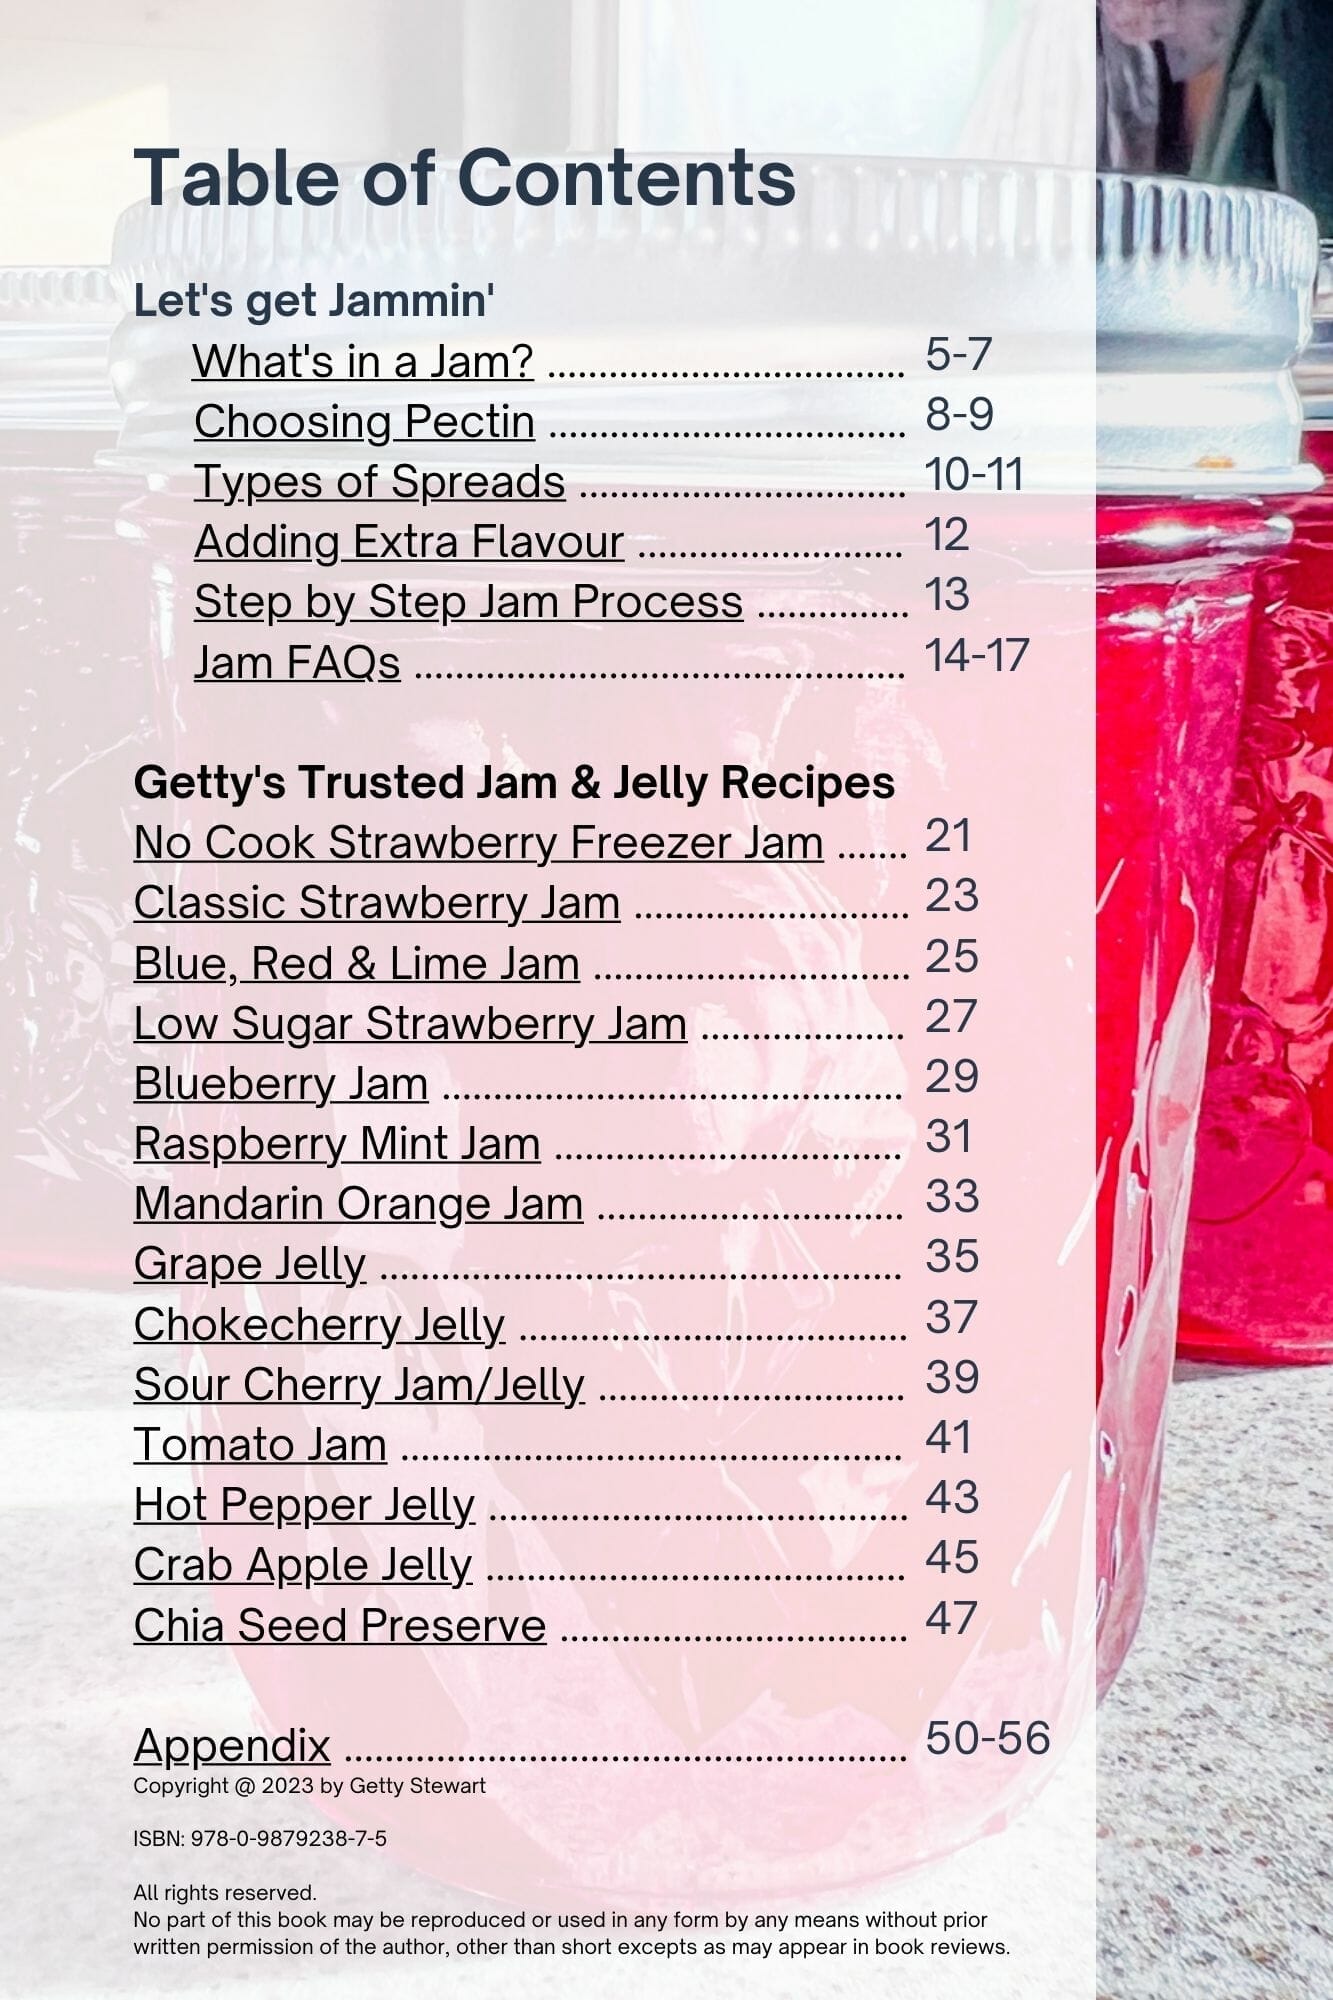 jams and jellies cookbook TofC